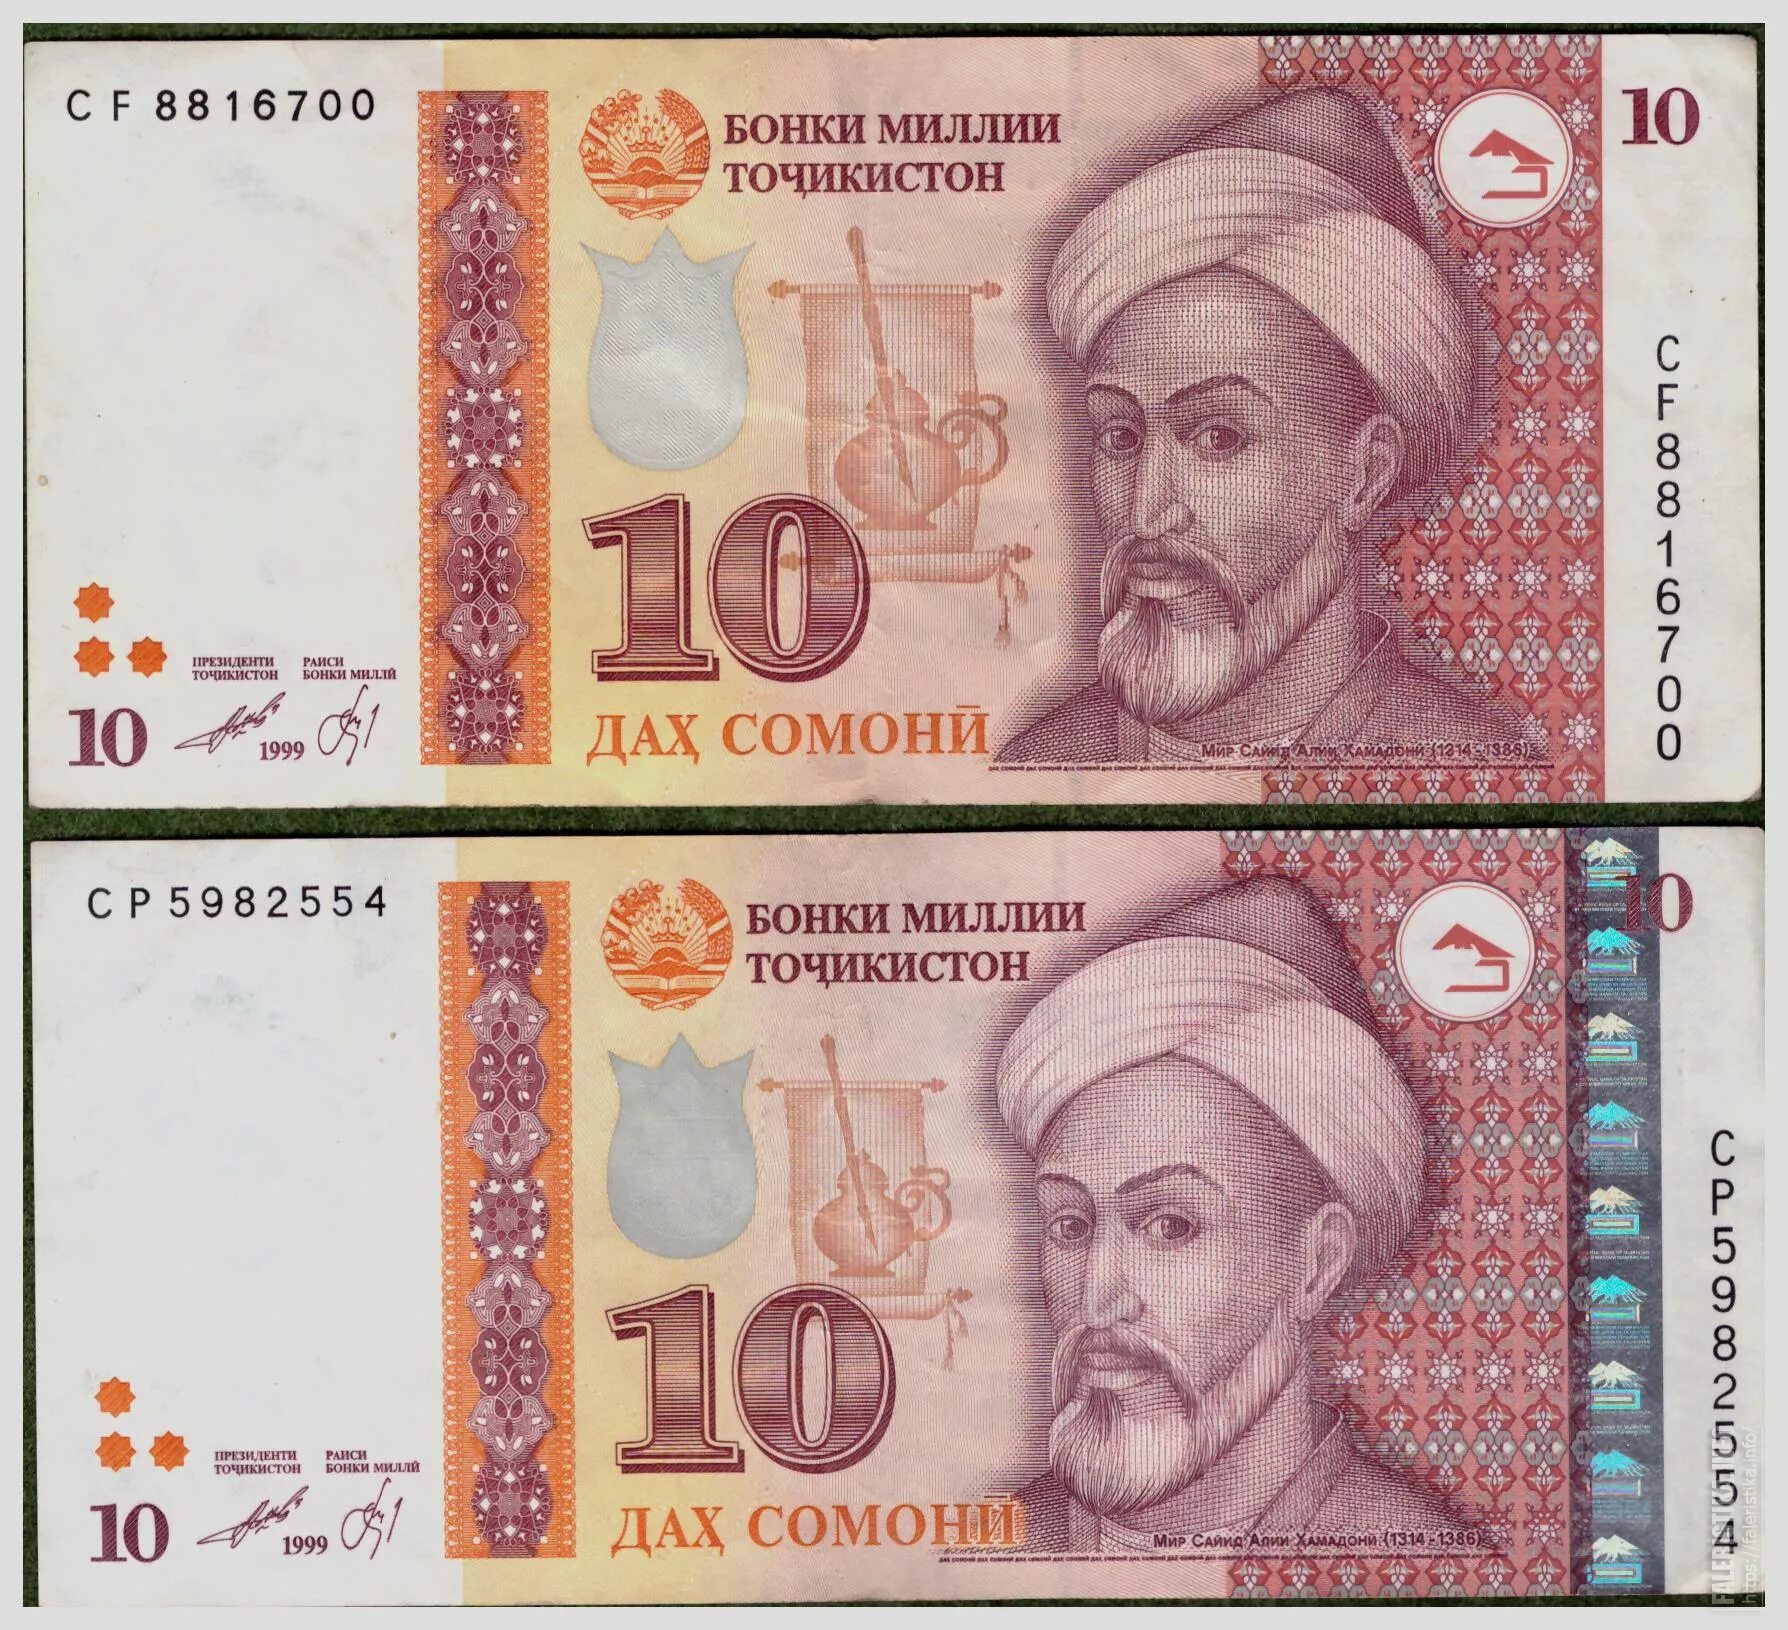 Деньги Таджикистана 500 Сомони. Деньги Таджикистана 10 Сомони. Купюра Таджикистана 500 Сомони. Купюра 500 Сомони. 1 точикистон